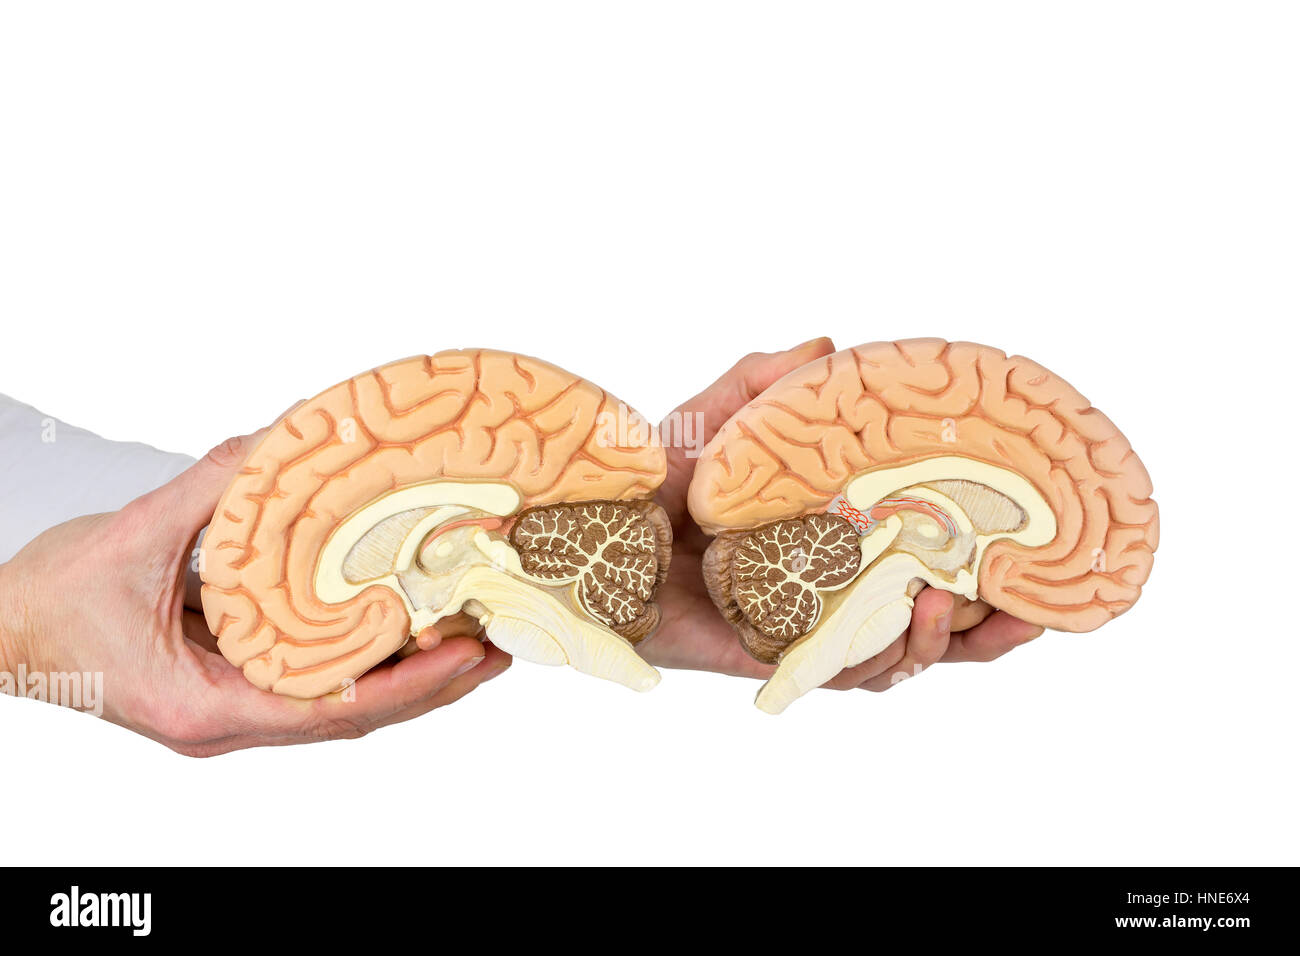 Hands holding models human brain hemispheres isolated on white background Stock Photo